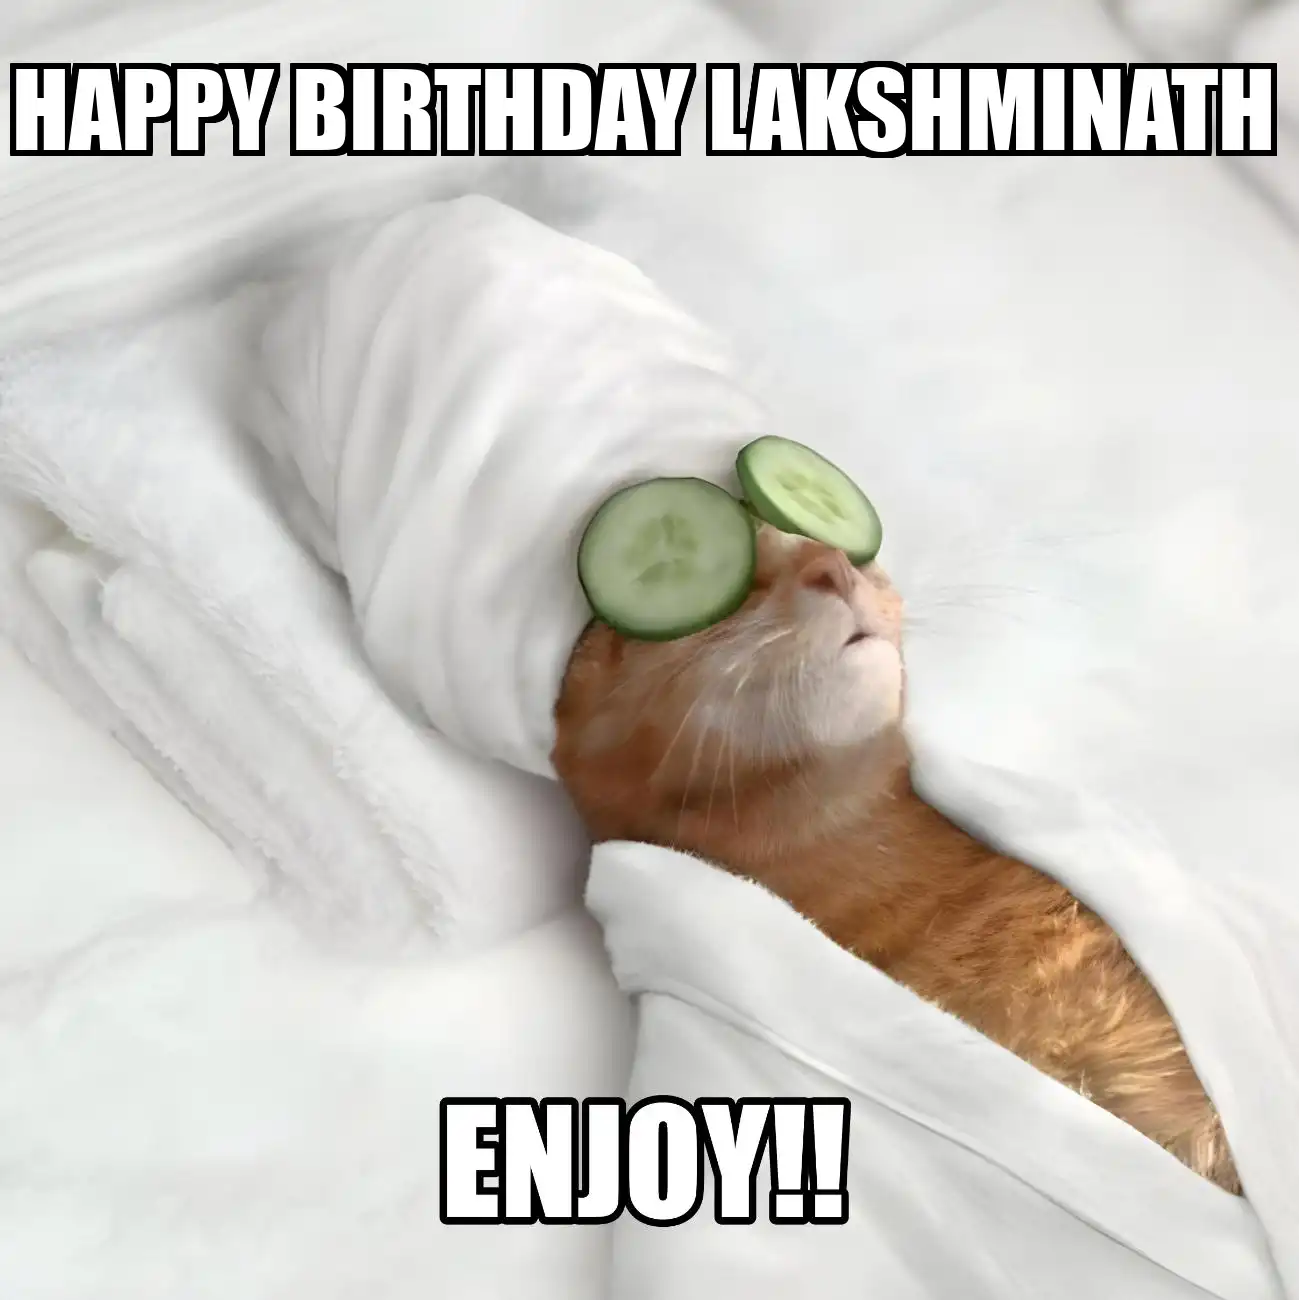 Happy Birthday Lakshminath Enjoy Cat Meme